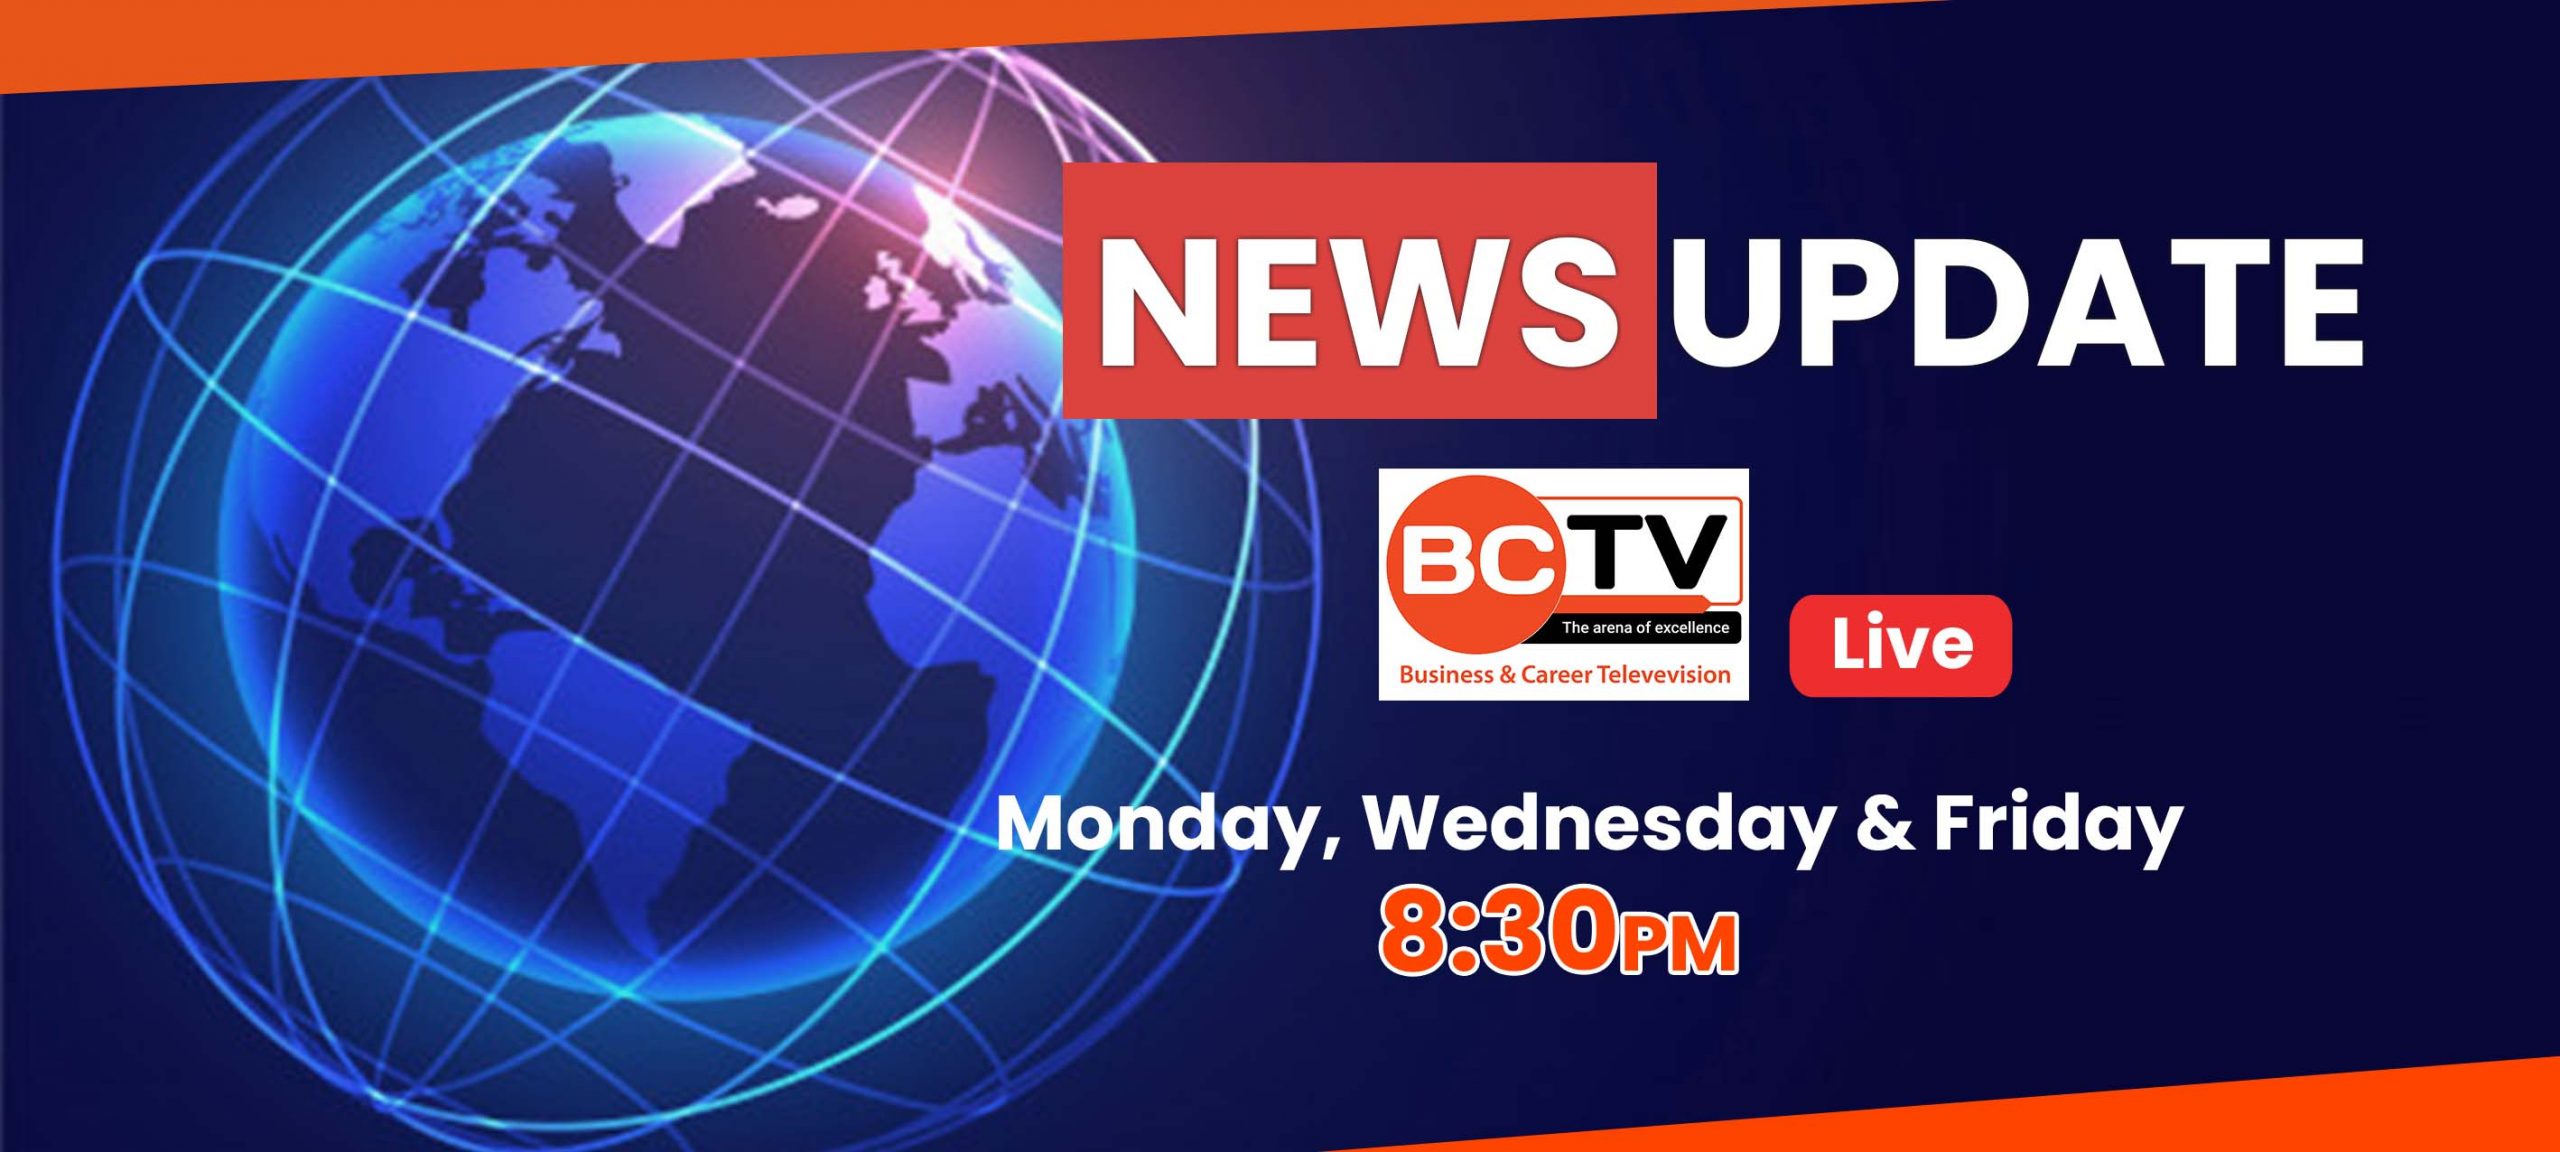 BCTV program - News update